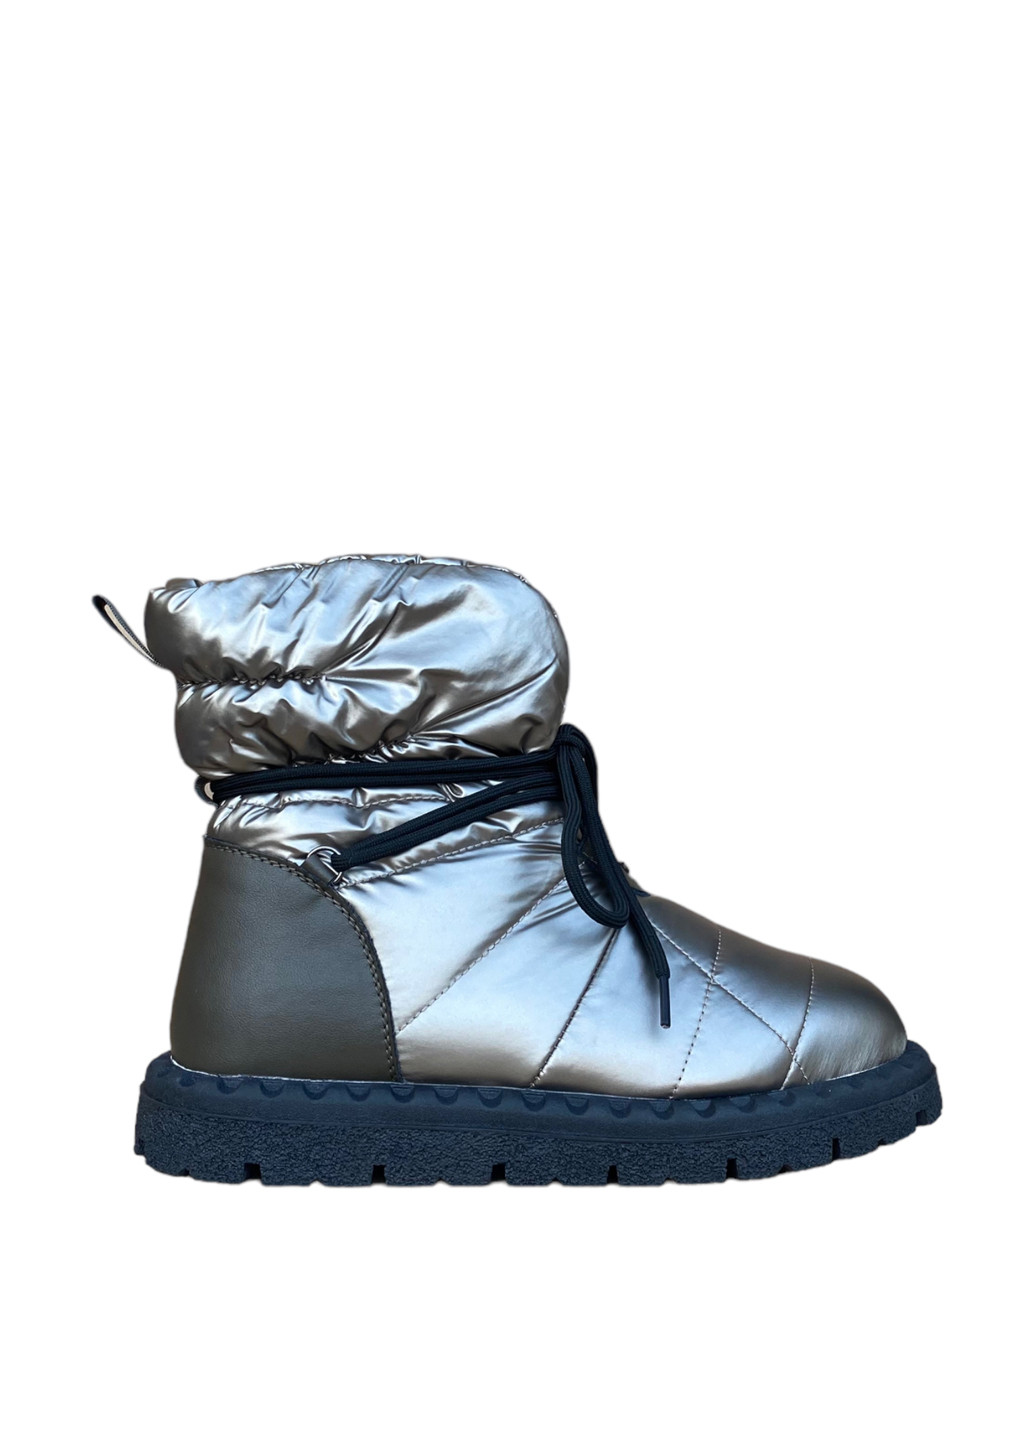 Зимние ботинки Lonza без декора тканевые